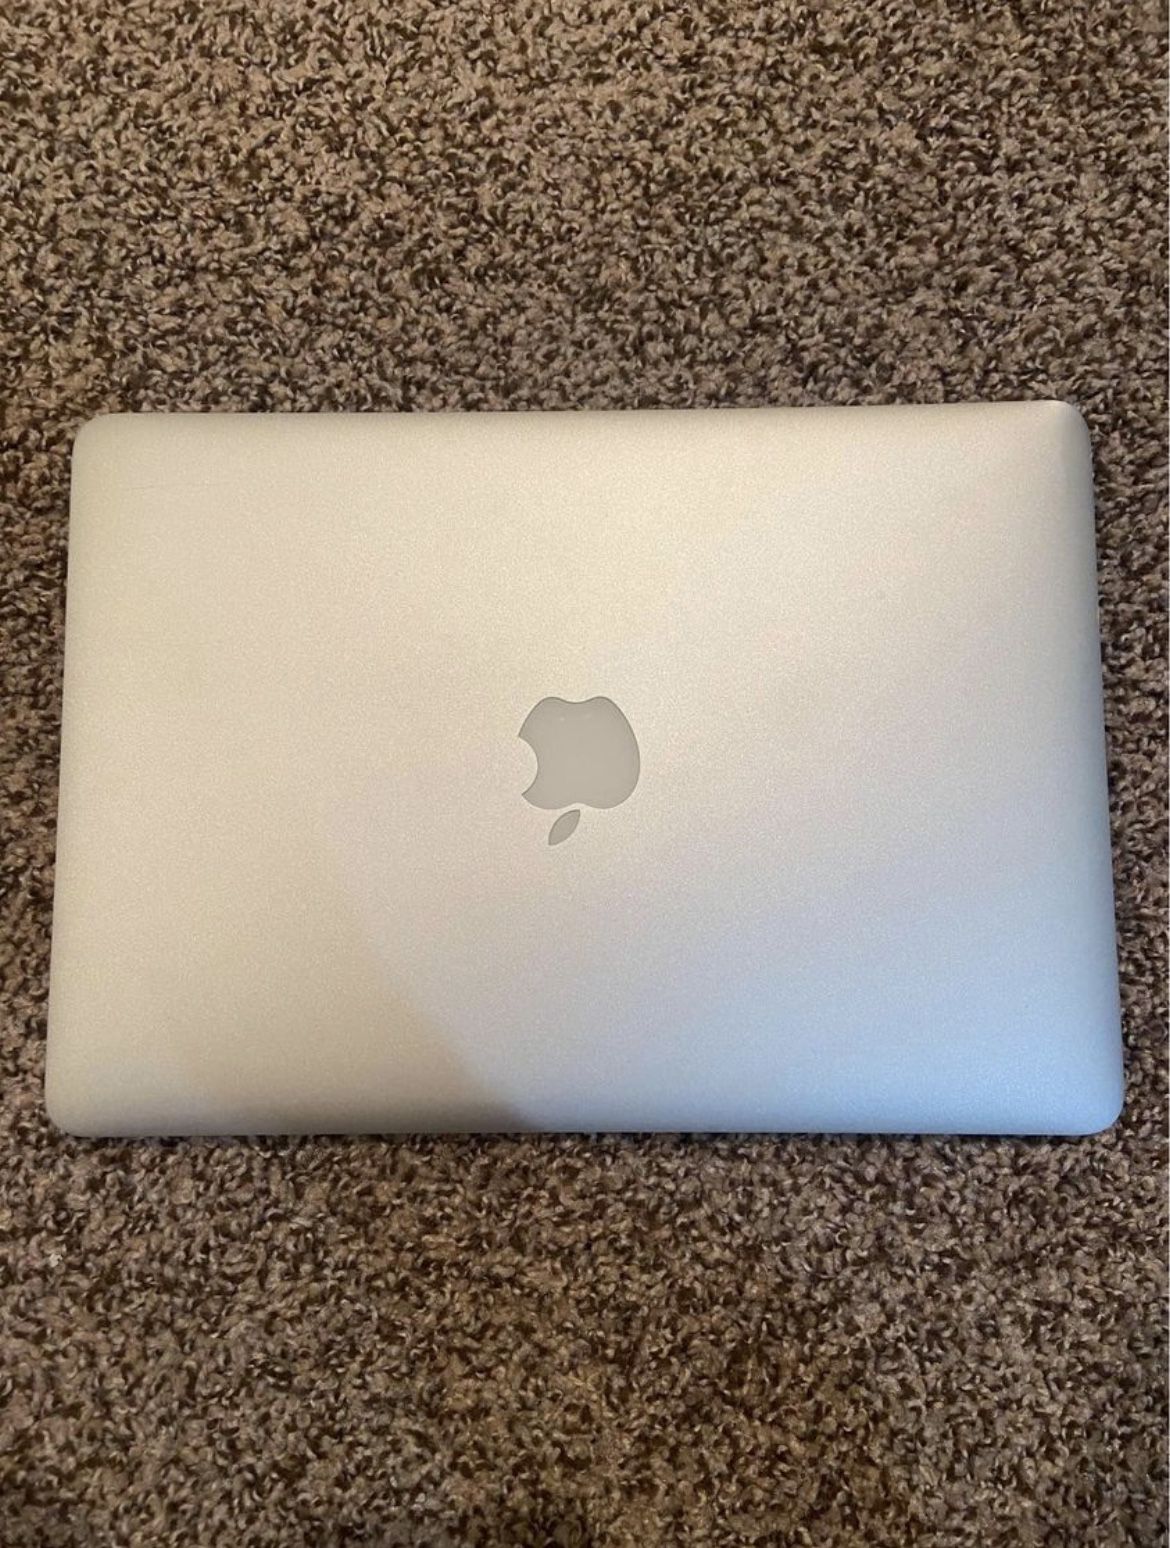 Apple MacBook Air 2014 13-inch